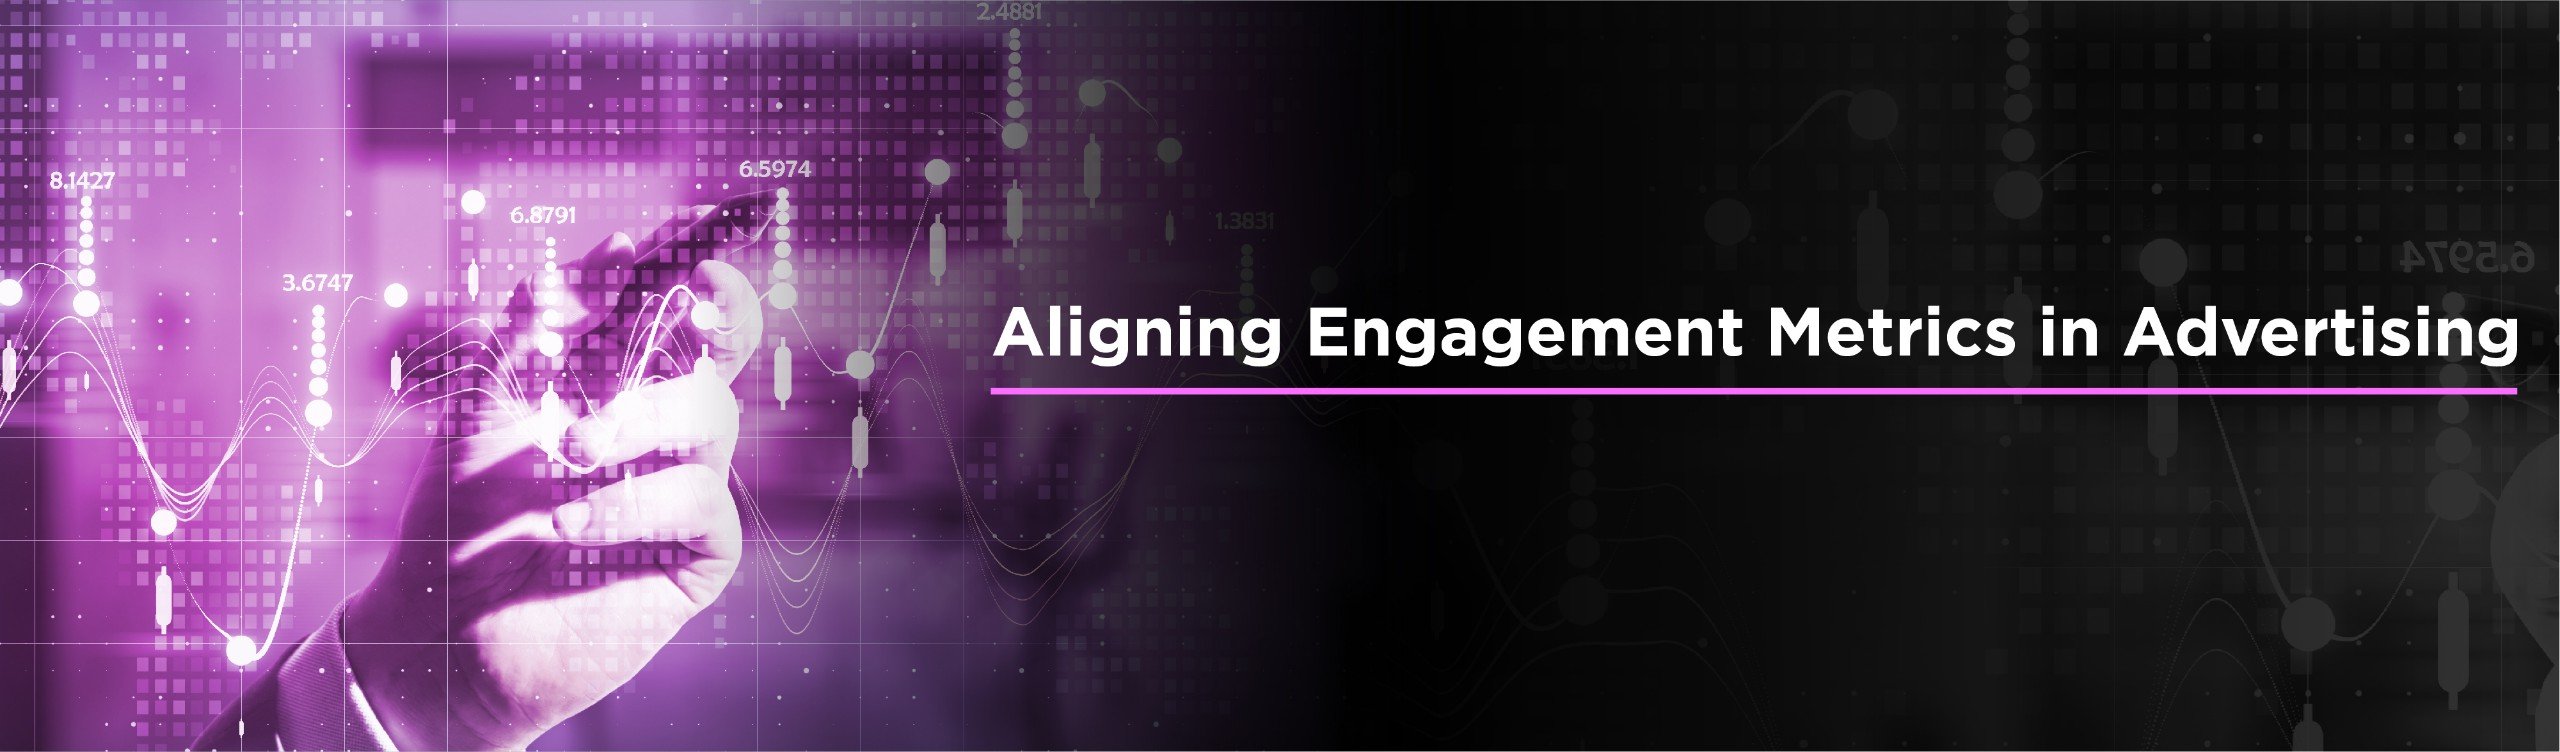 Aligning Engagement Metrics in Advertising